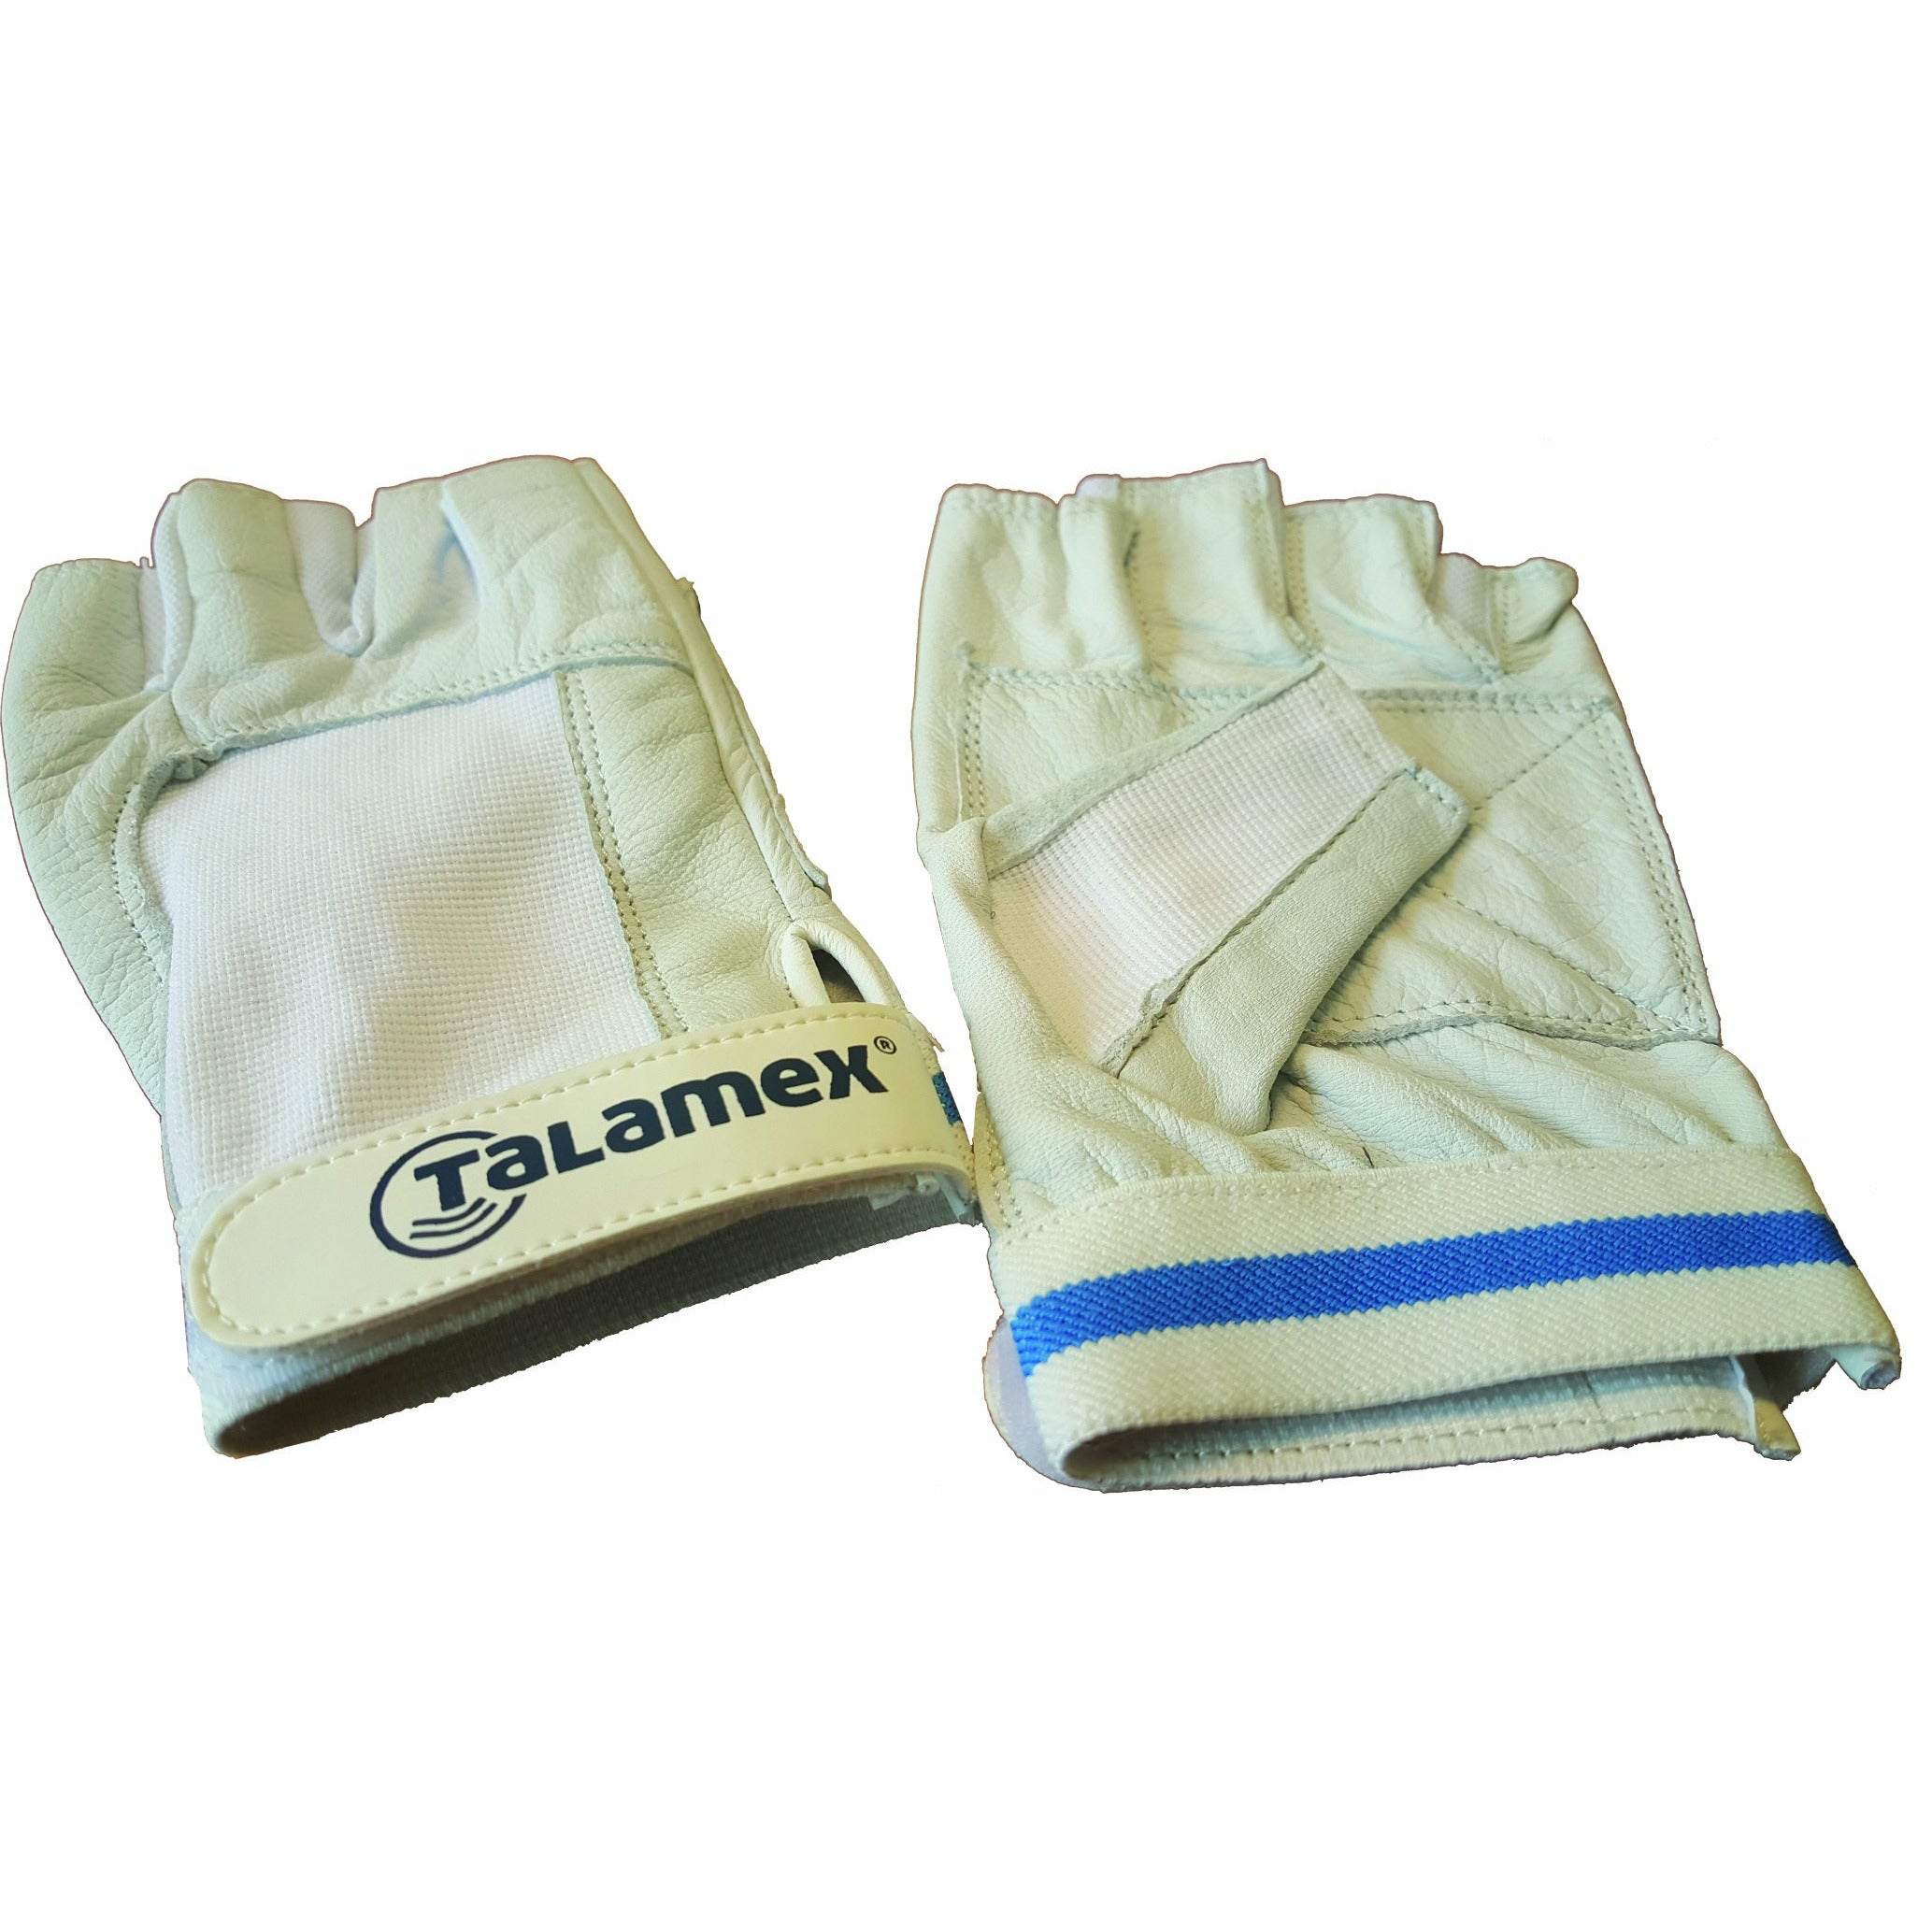 Talamex S'Gloves Open Xlarge 20802004